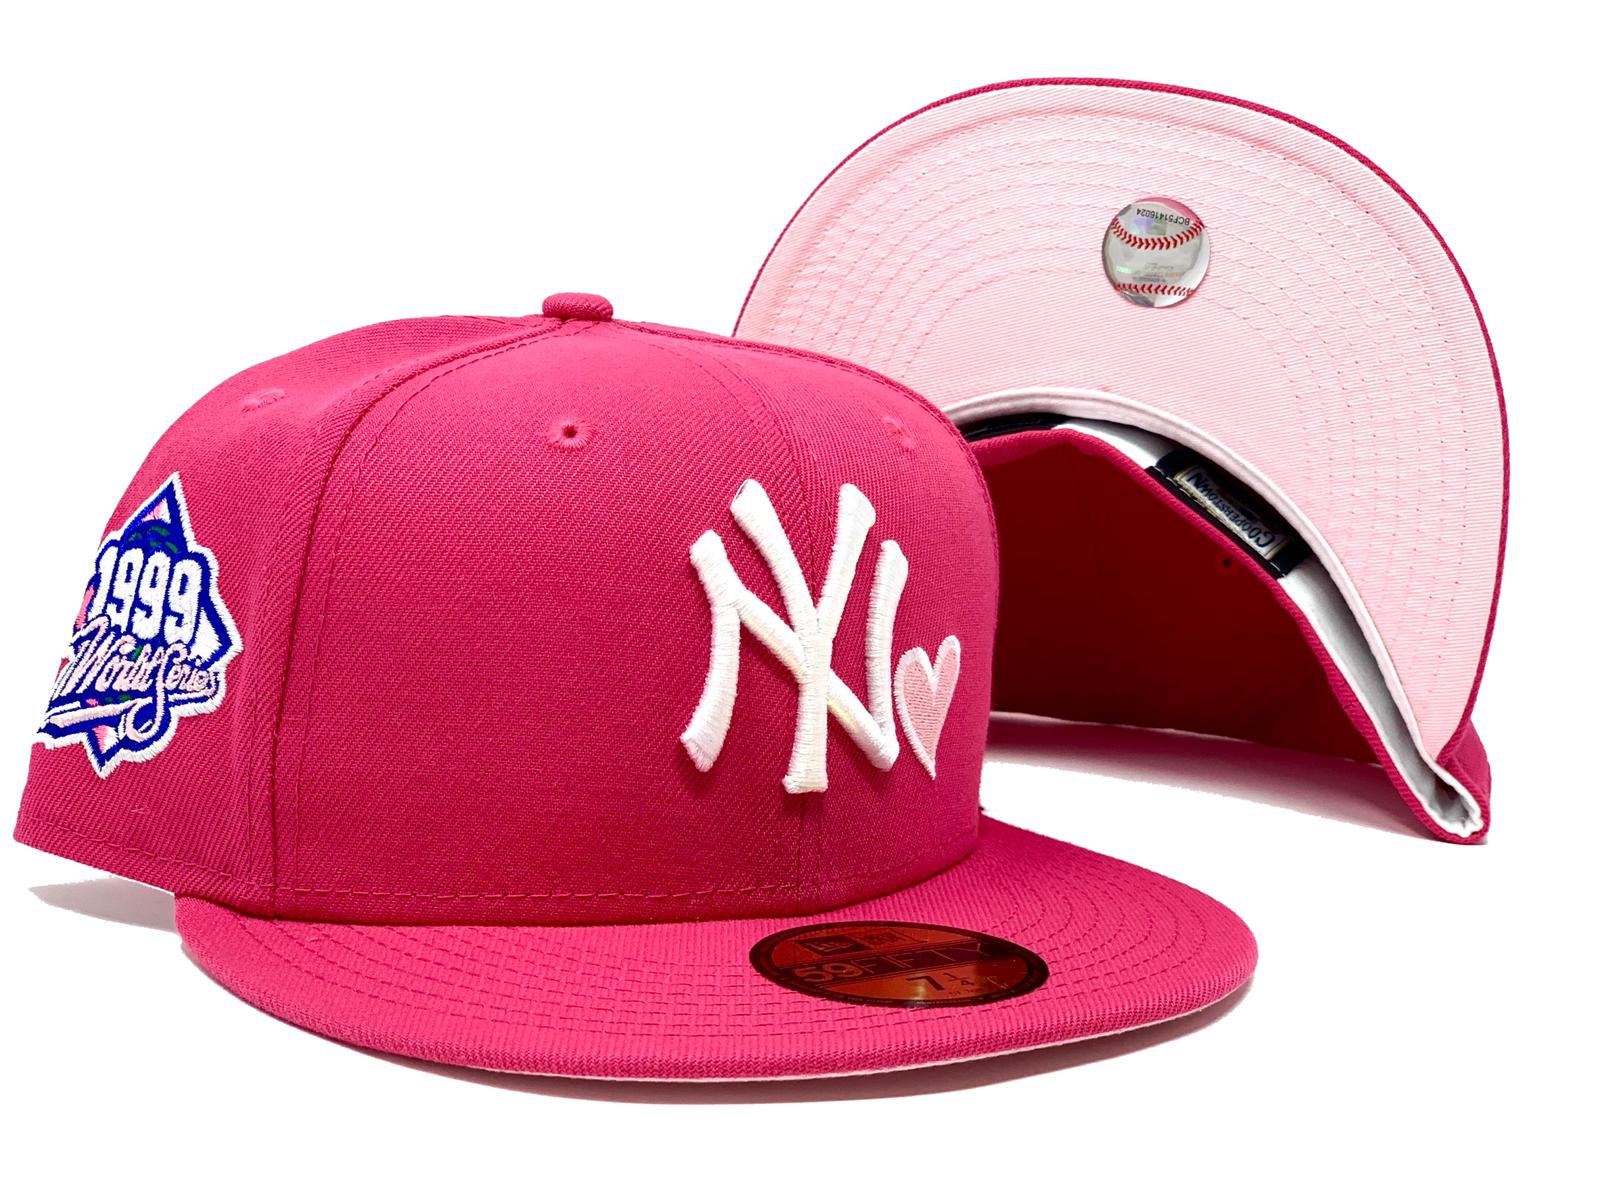 Mens New Era PinkGreen New York Yankees Cooperstown India